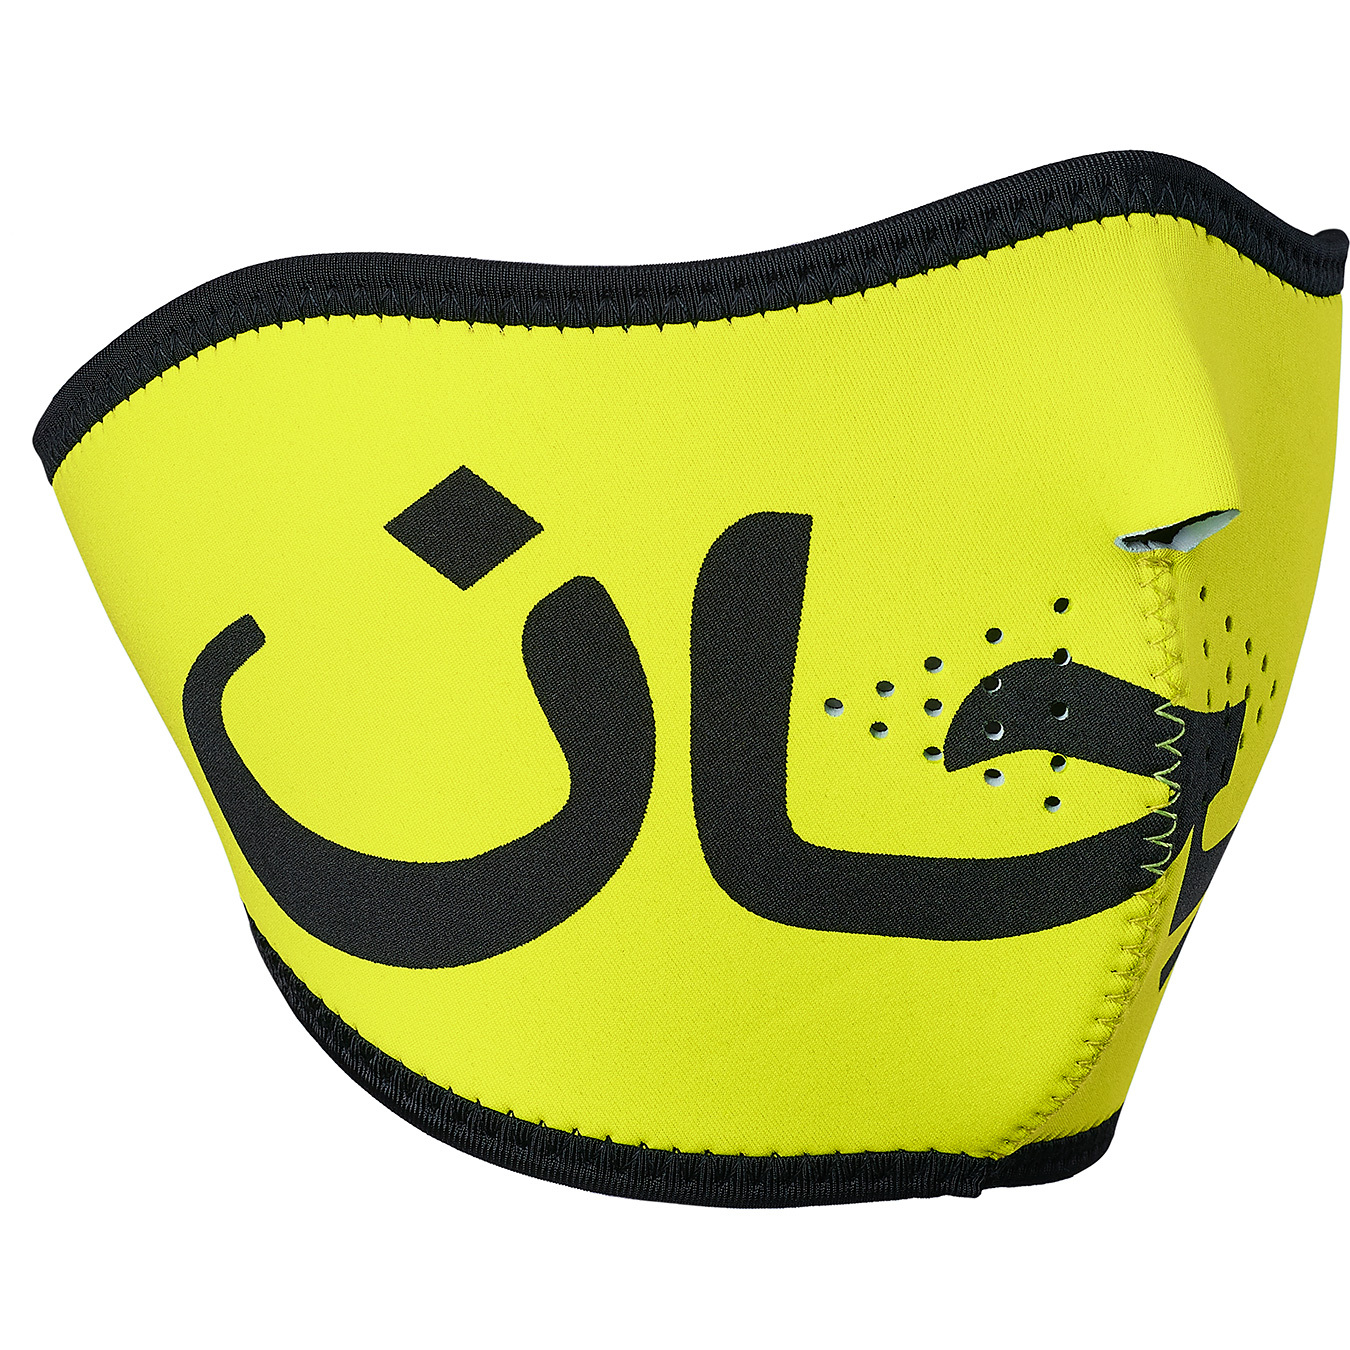 Arabic Logo Neoprene Facemask - fall winter 2017 - Supreme